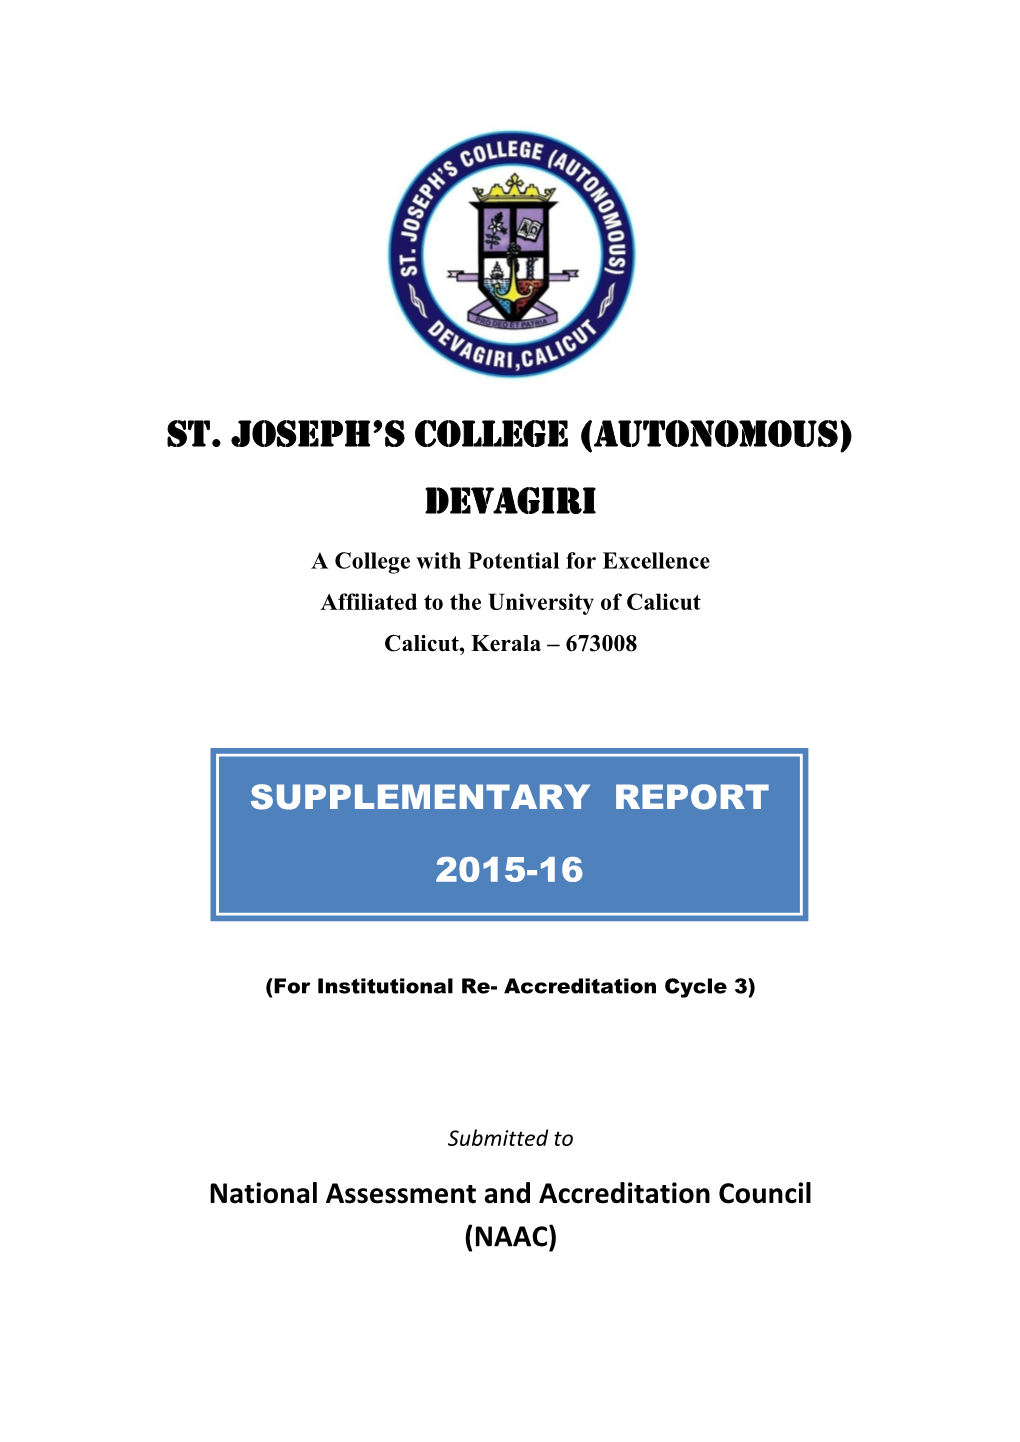 Supplementary Report 2015-16